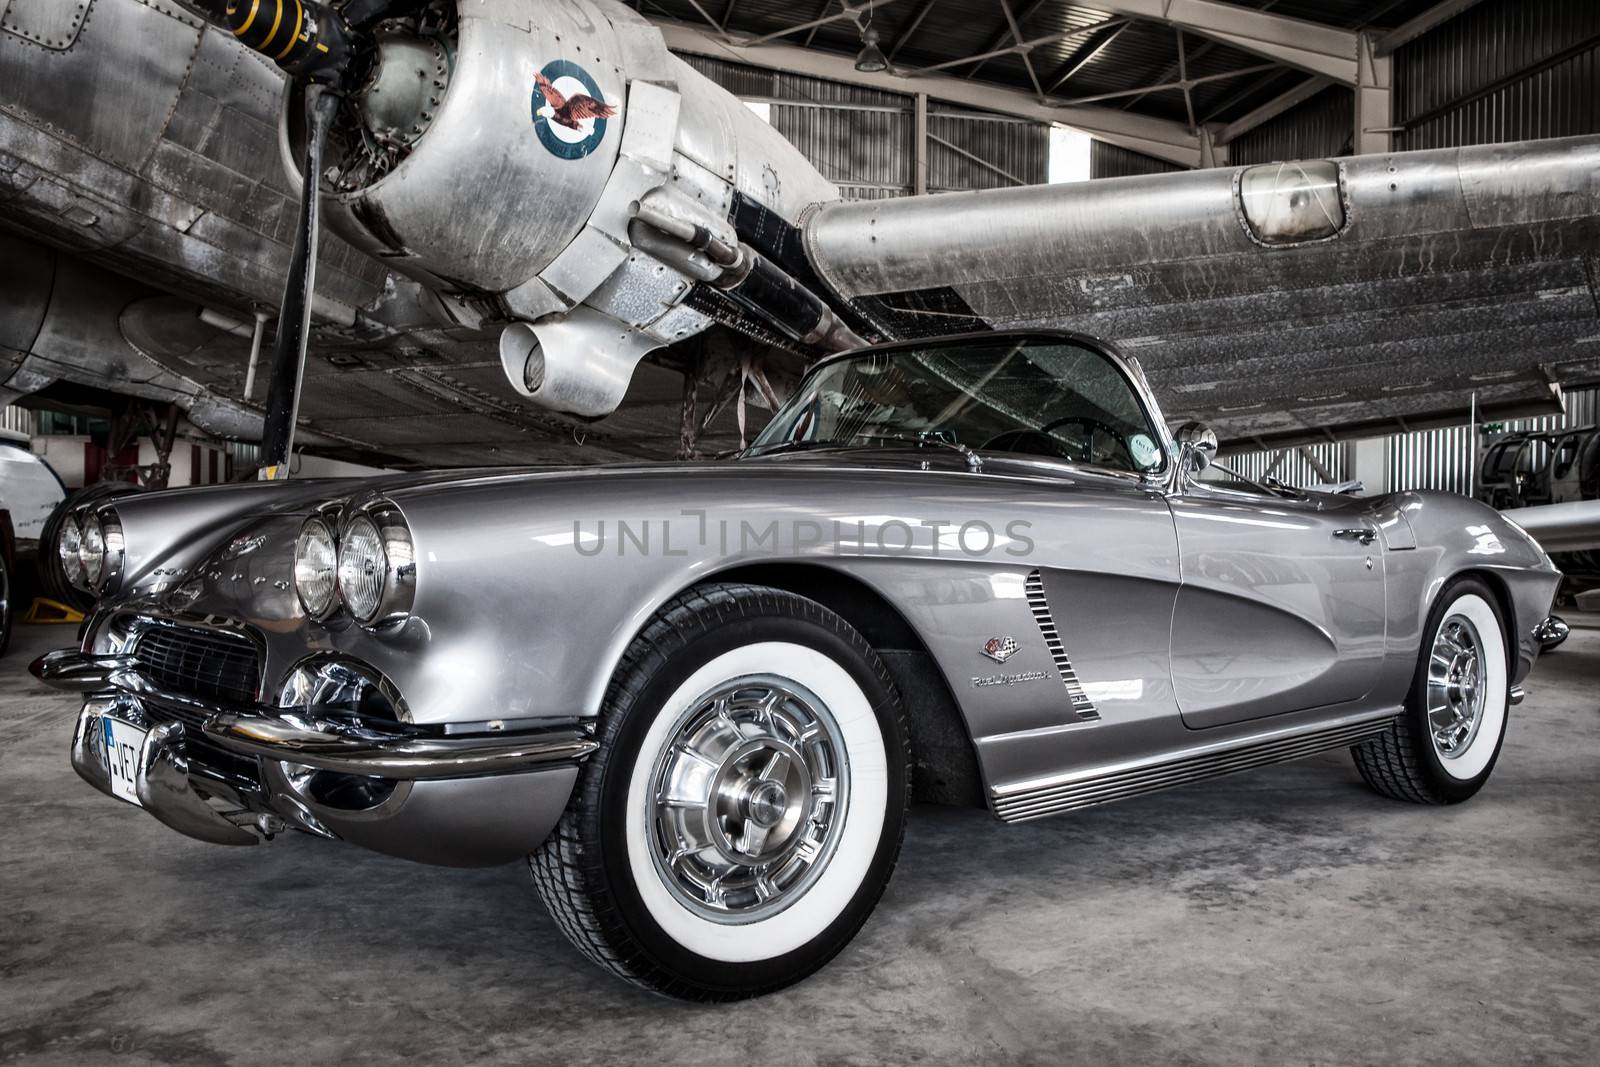 Beautiful classic American automobile - Corvette 1962